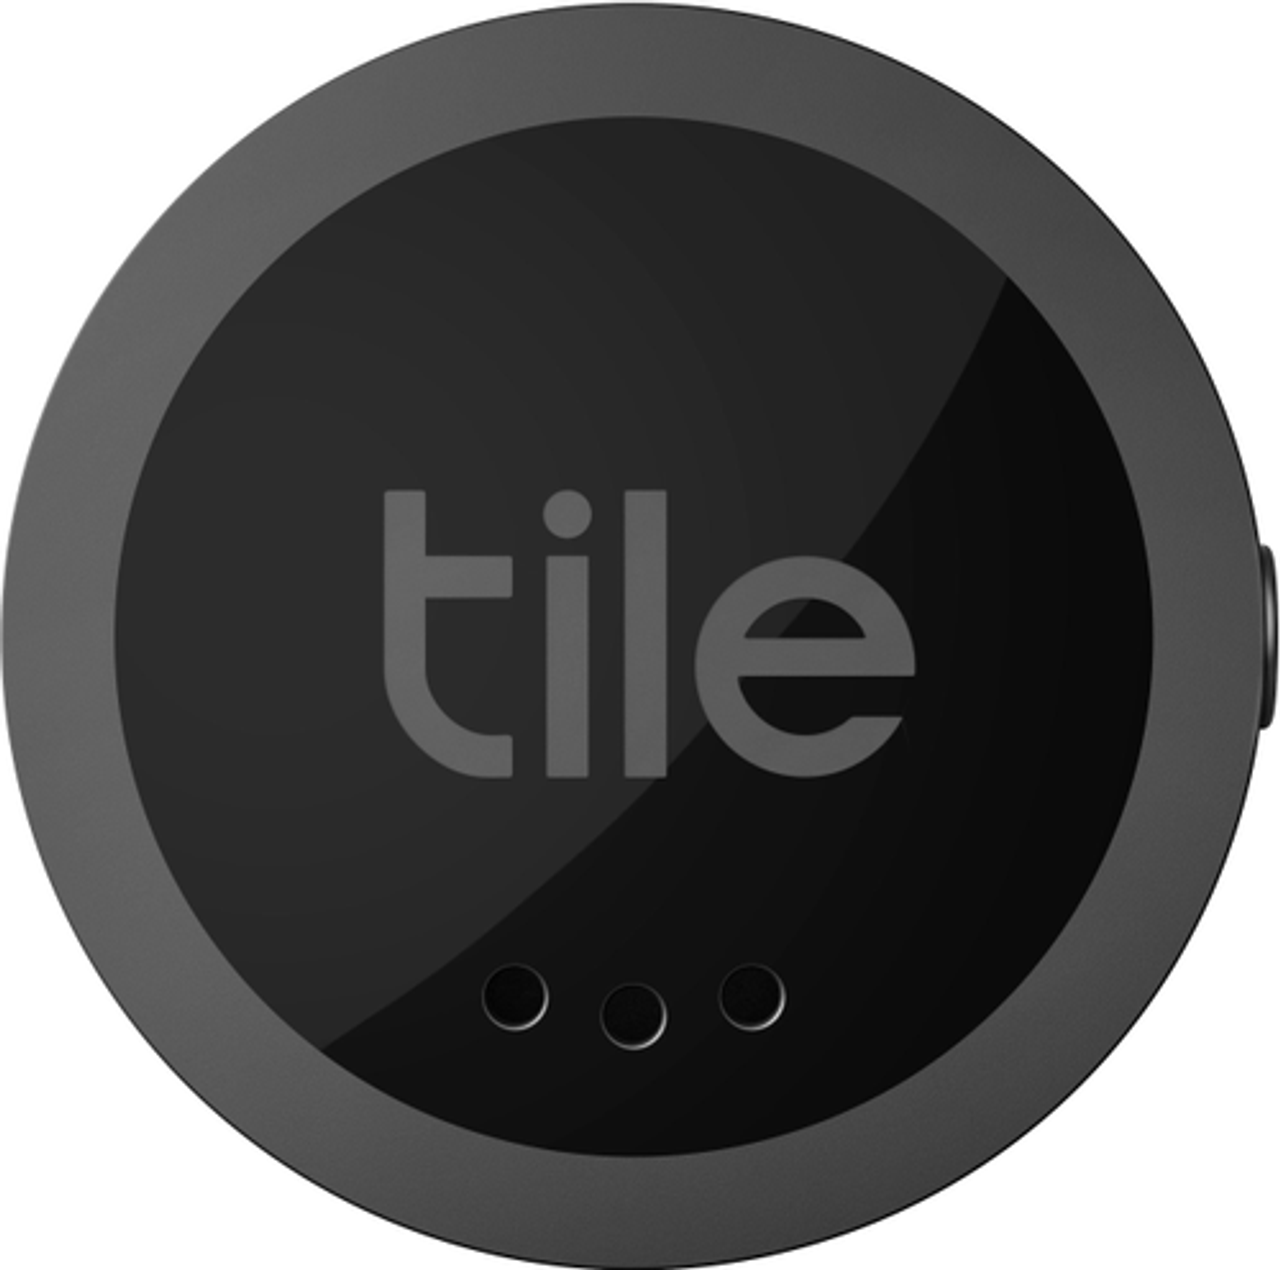 Tile Sticker (2022) - 1 pack - Black